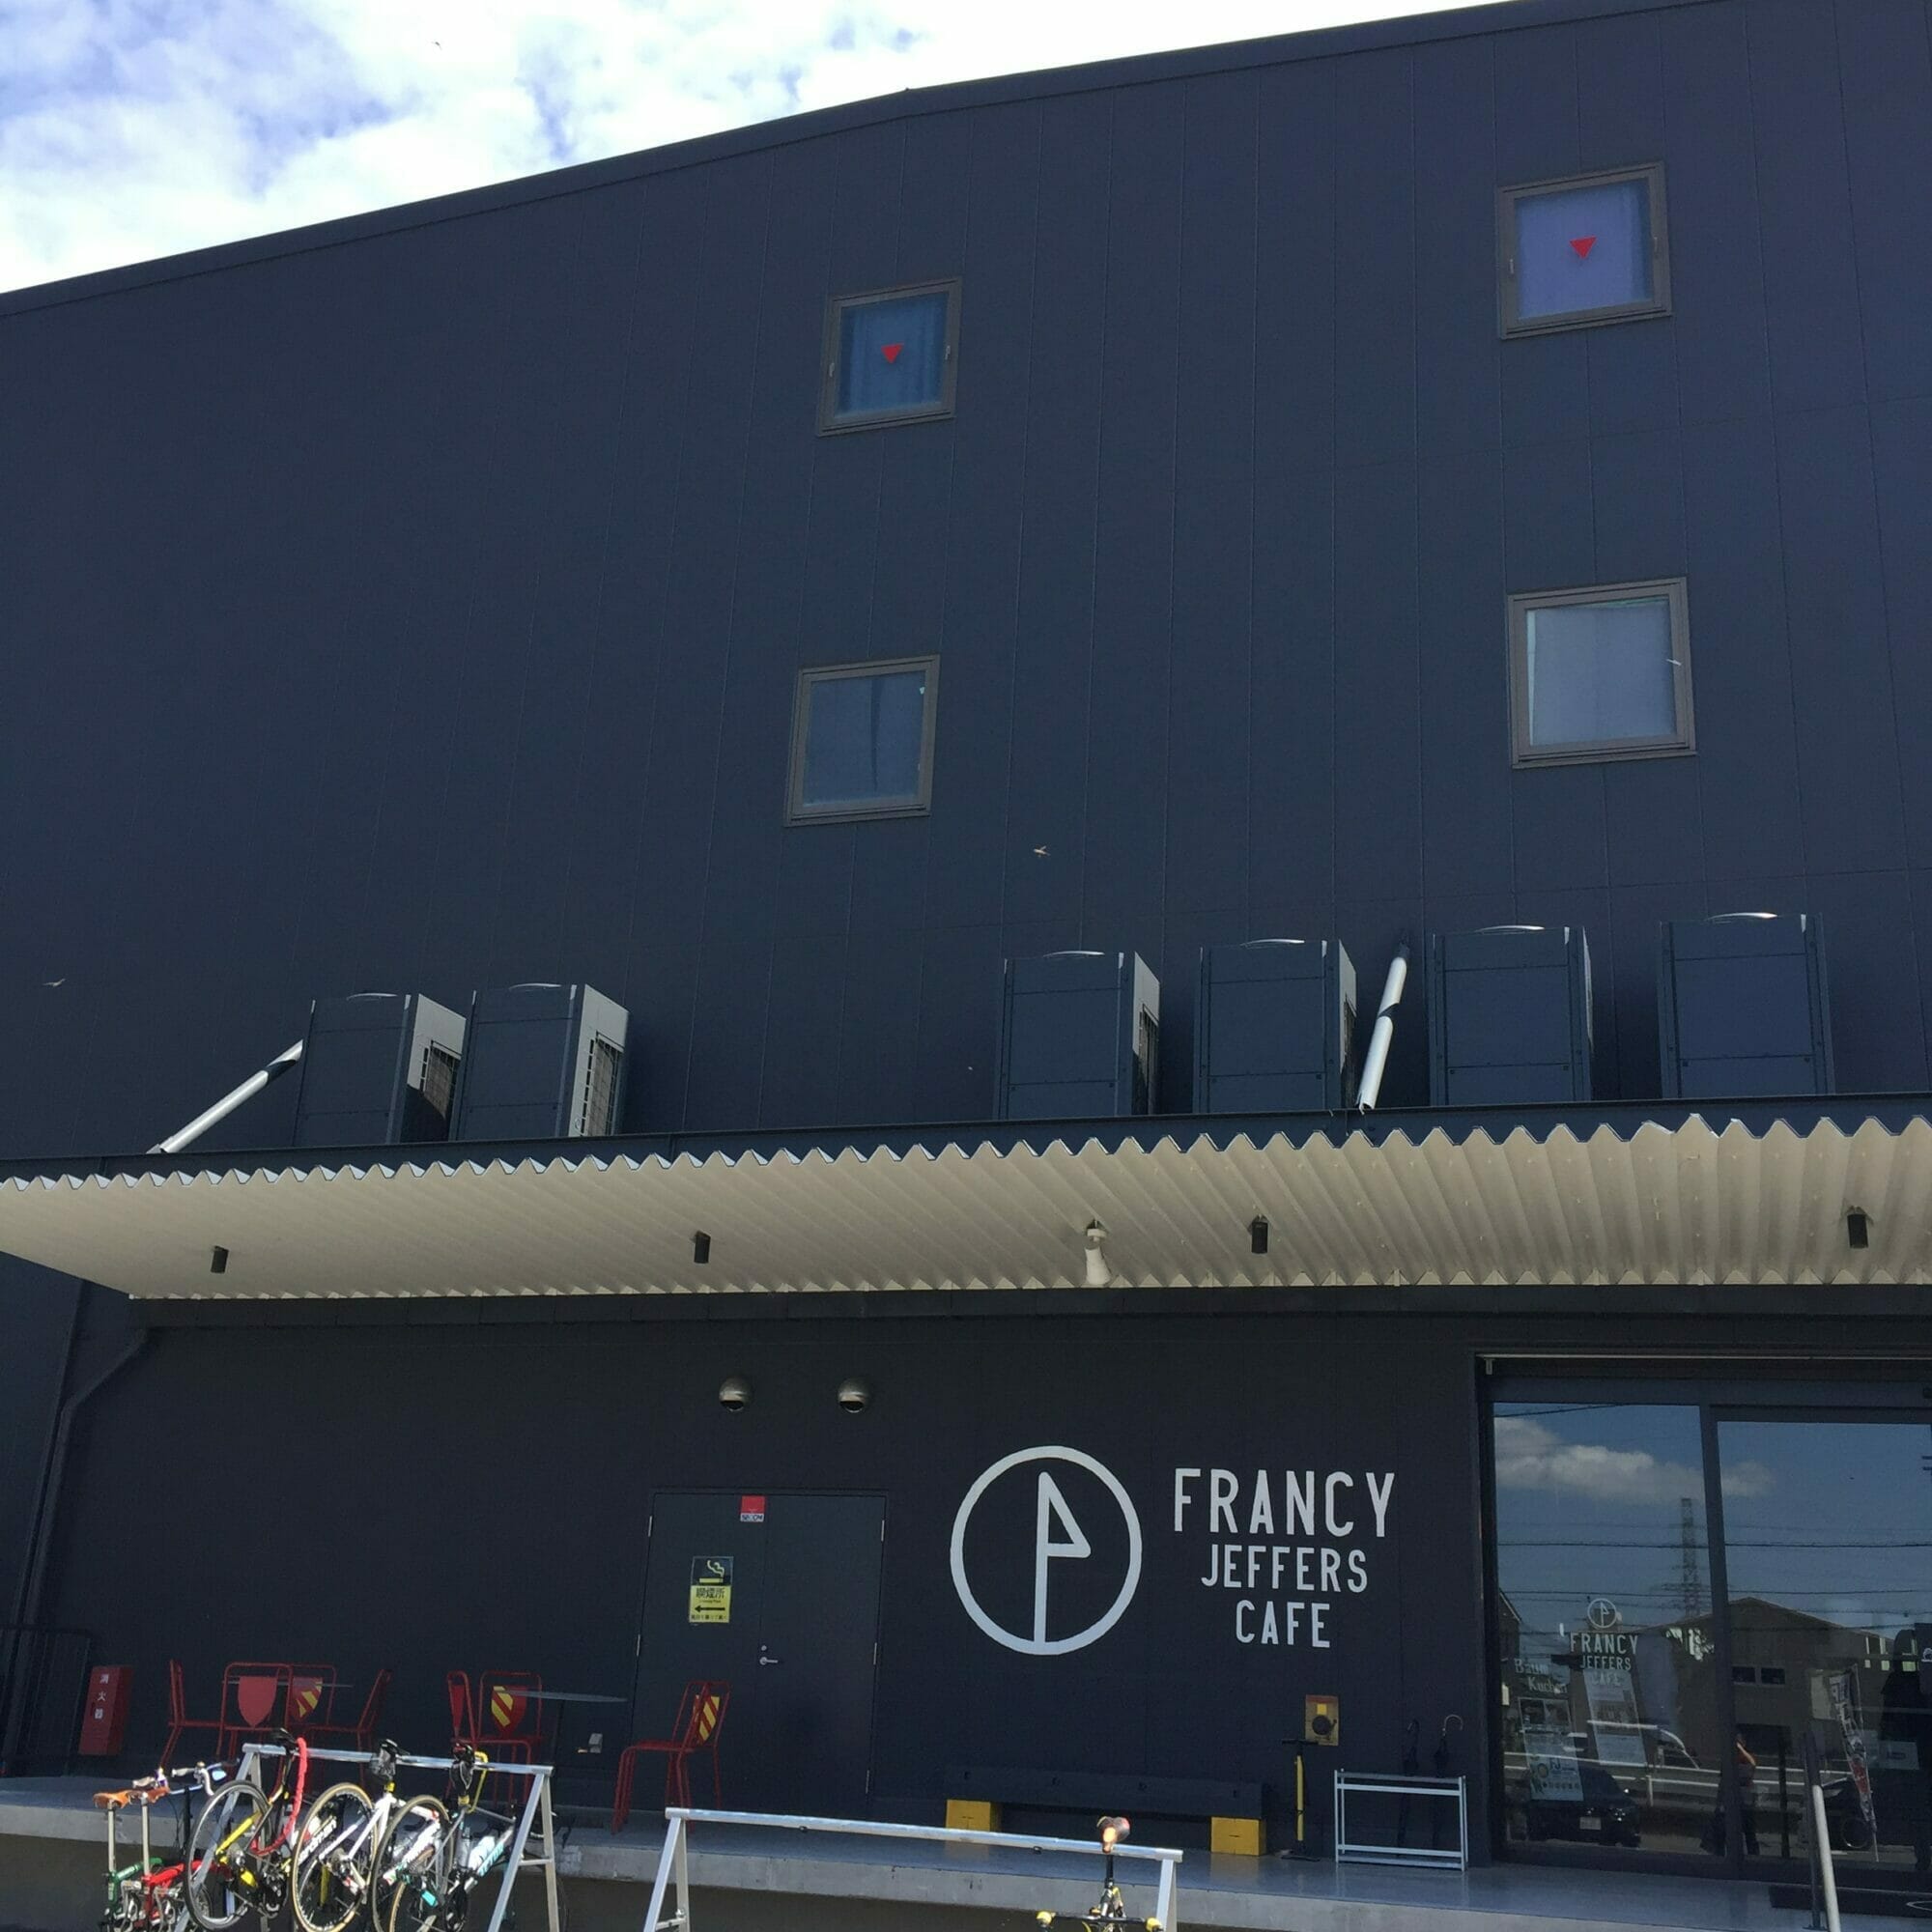 [Cafe] FRANCY JEFFERS CAFE – サイクリングショップと併設 – ID2110 [2019/09/14] ID2110